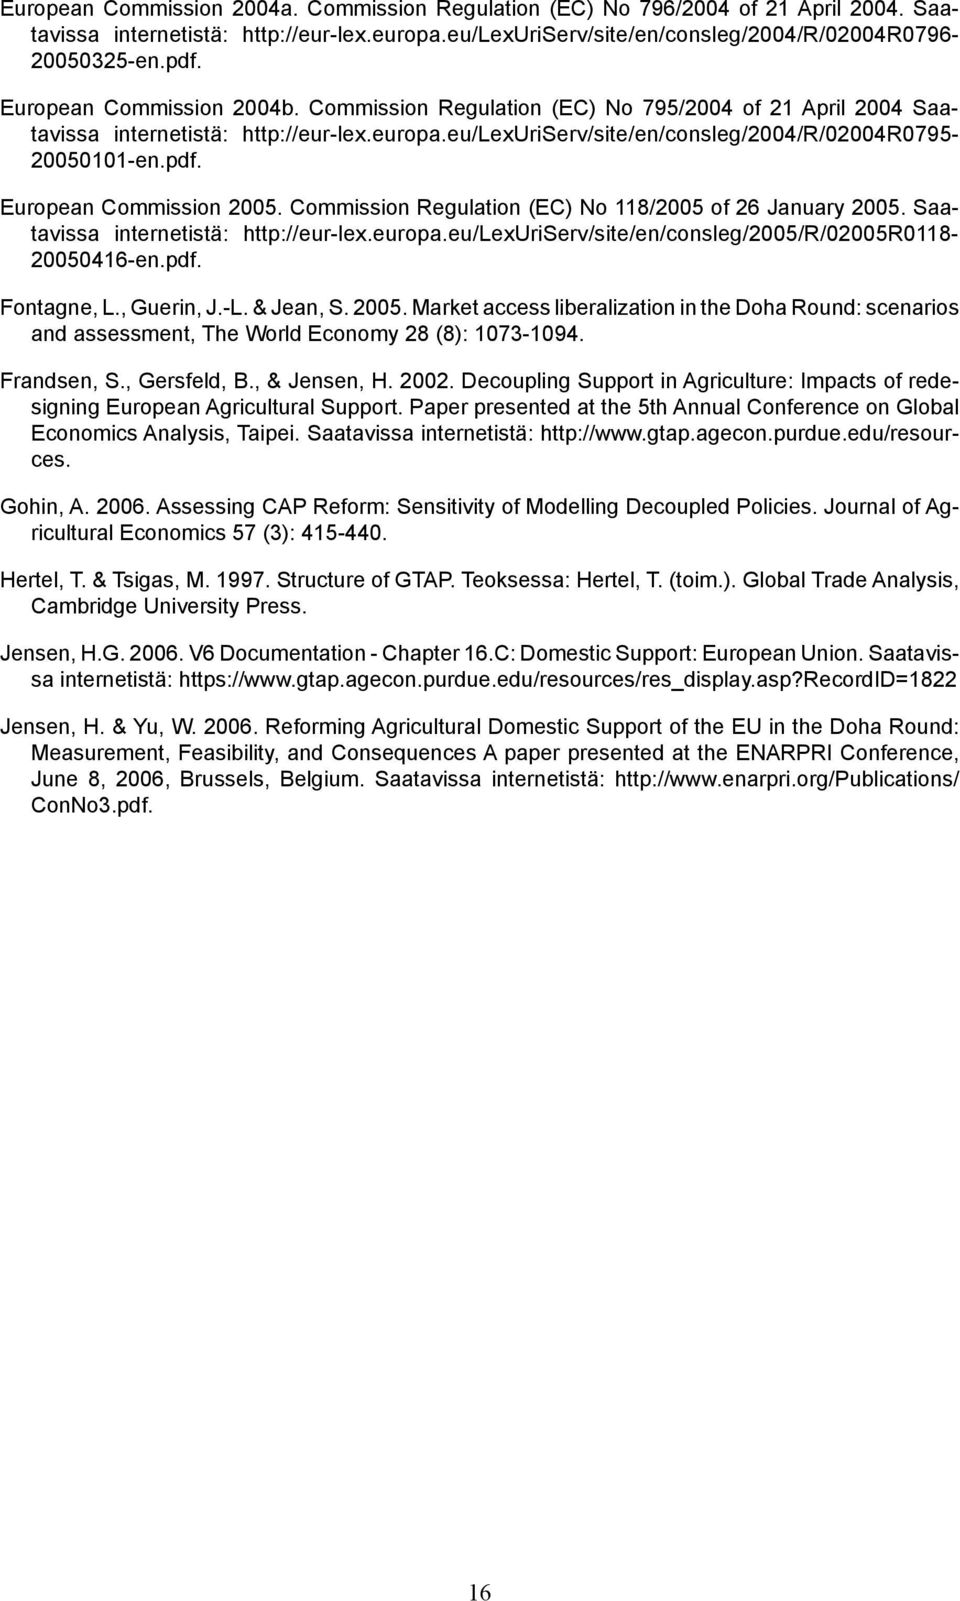 European Commission 2005. Commission Regulation (EC) No 118/2005 of 26 January 2005. Saatavissa internetistä: http://eur-lex.europa.eu/lexuriserv/site/en/consleg/2005/r/02005r0118-20050416-en.pdf.